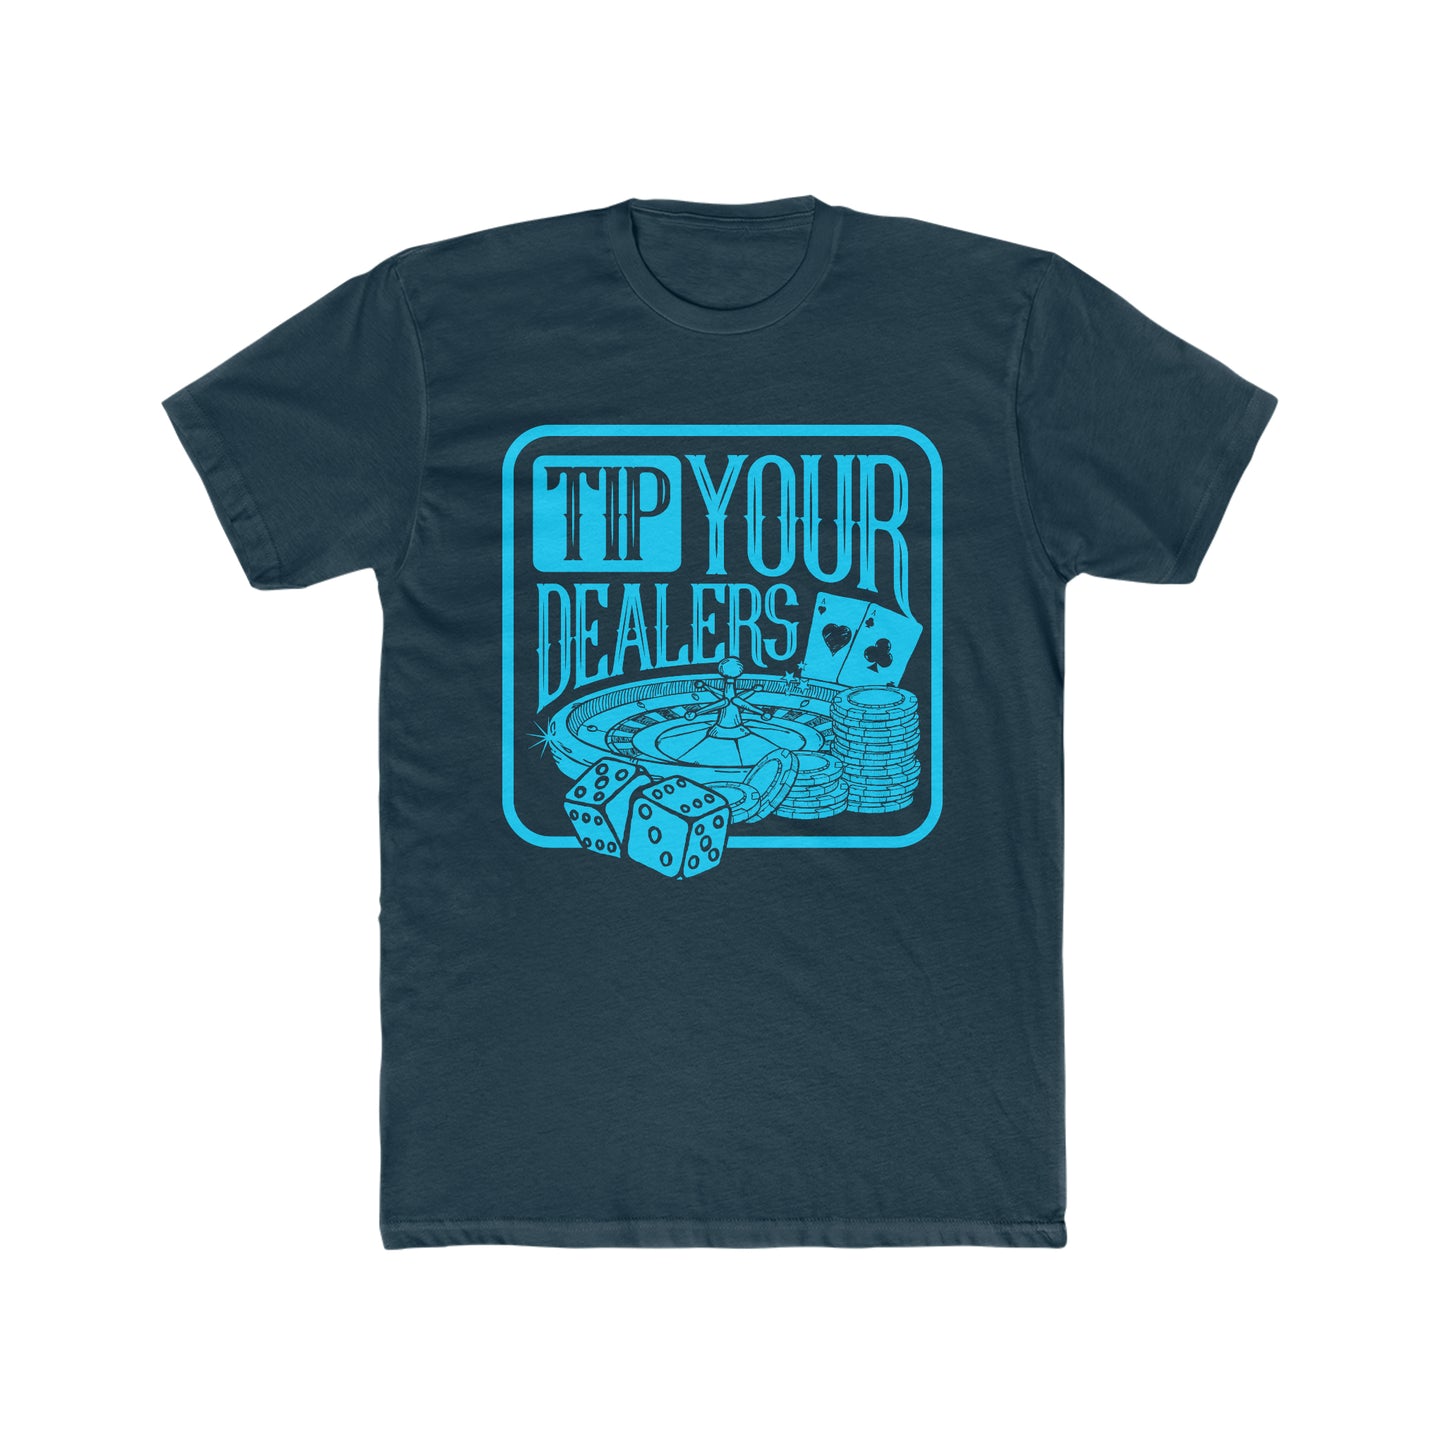 Tip Your Dealers t-shirt - Light blue on Black or White